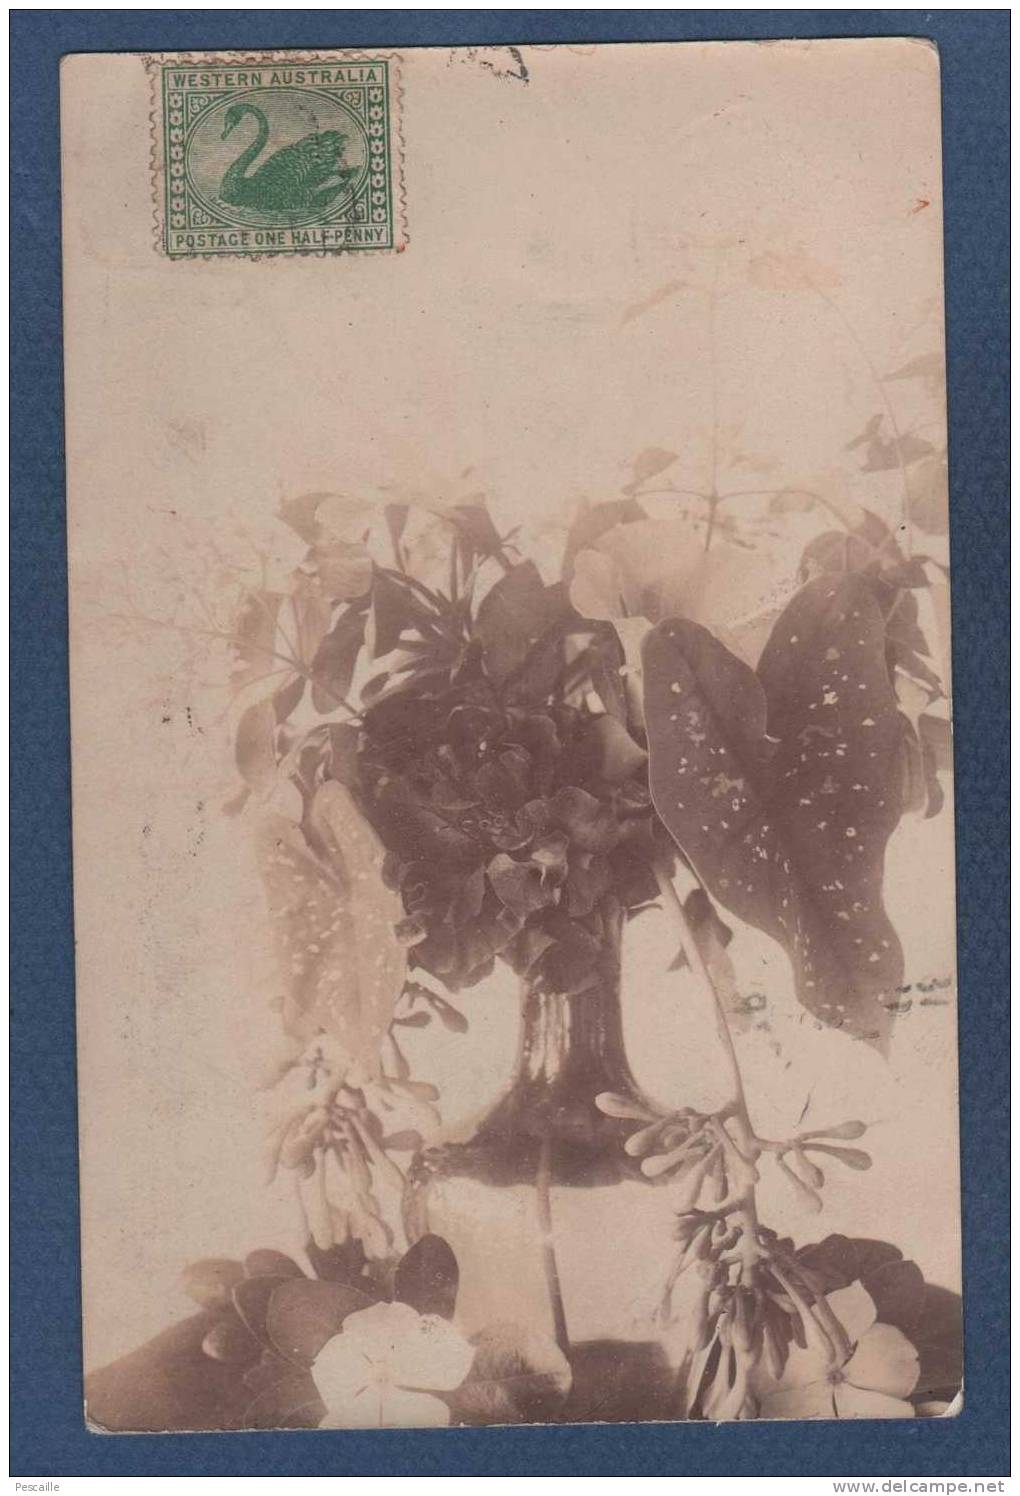 CARTE PHOTO FLEURS DANS UN VASE - 1912 - CIRCULEE STAMP WESTERN AUSTRALIA CYGNE SWAN POSTAGE ONE HALF-PENNY VERT - Covers & Documents